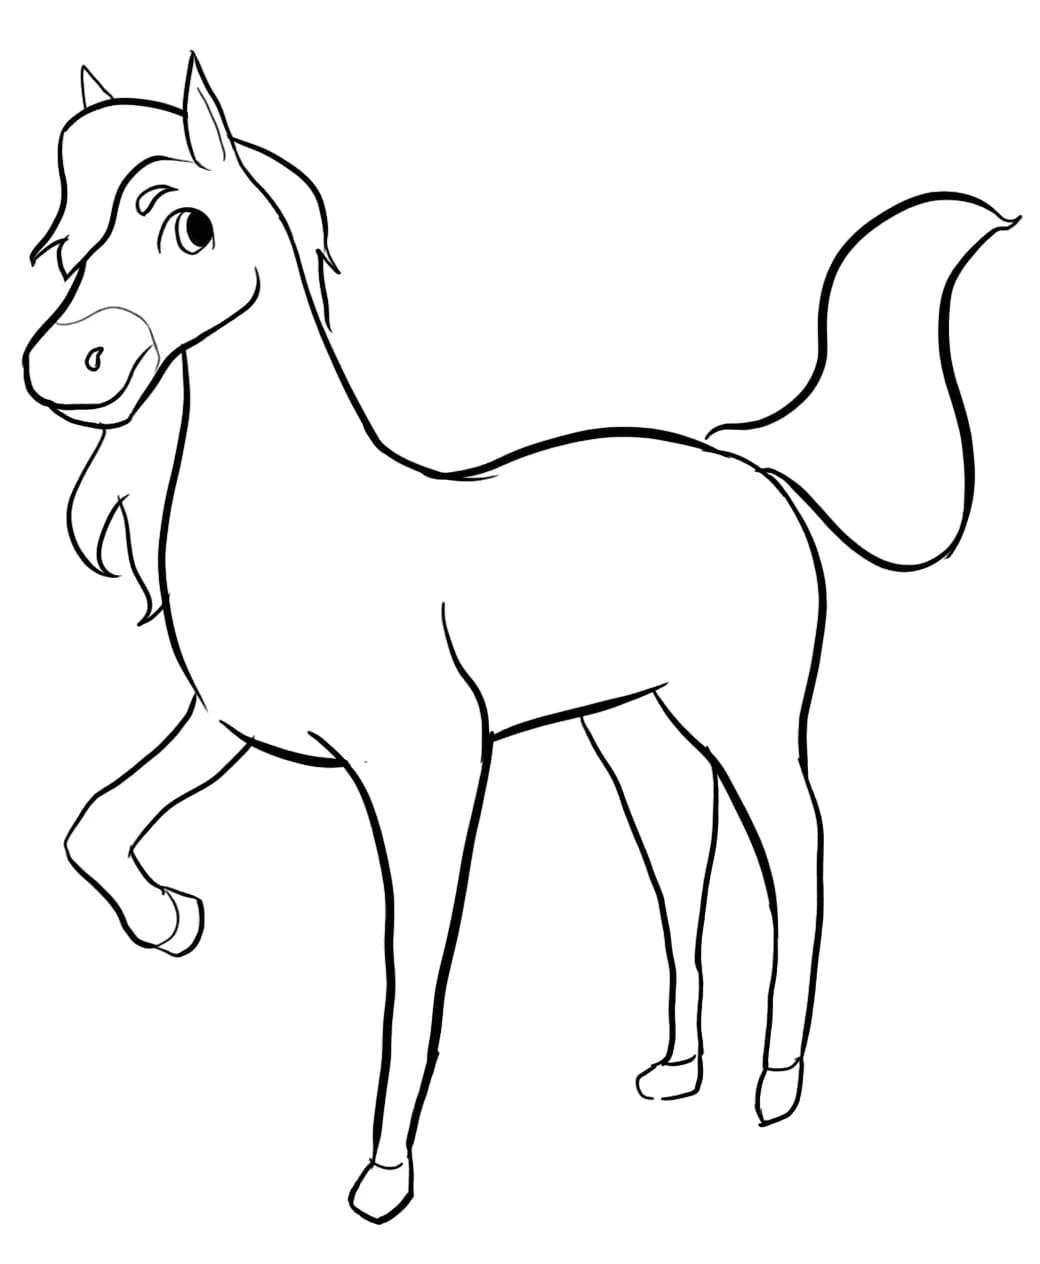 Målarbild Tecknad Häst